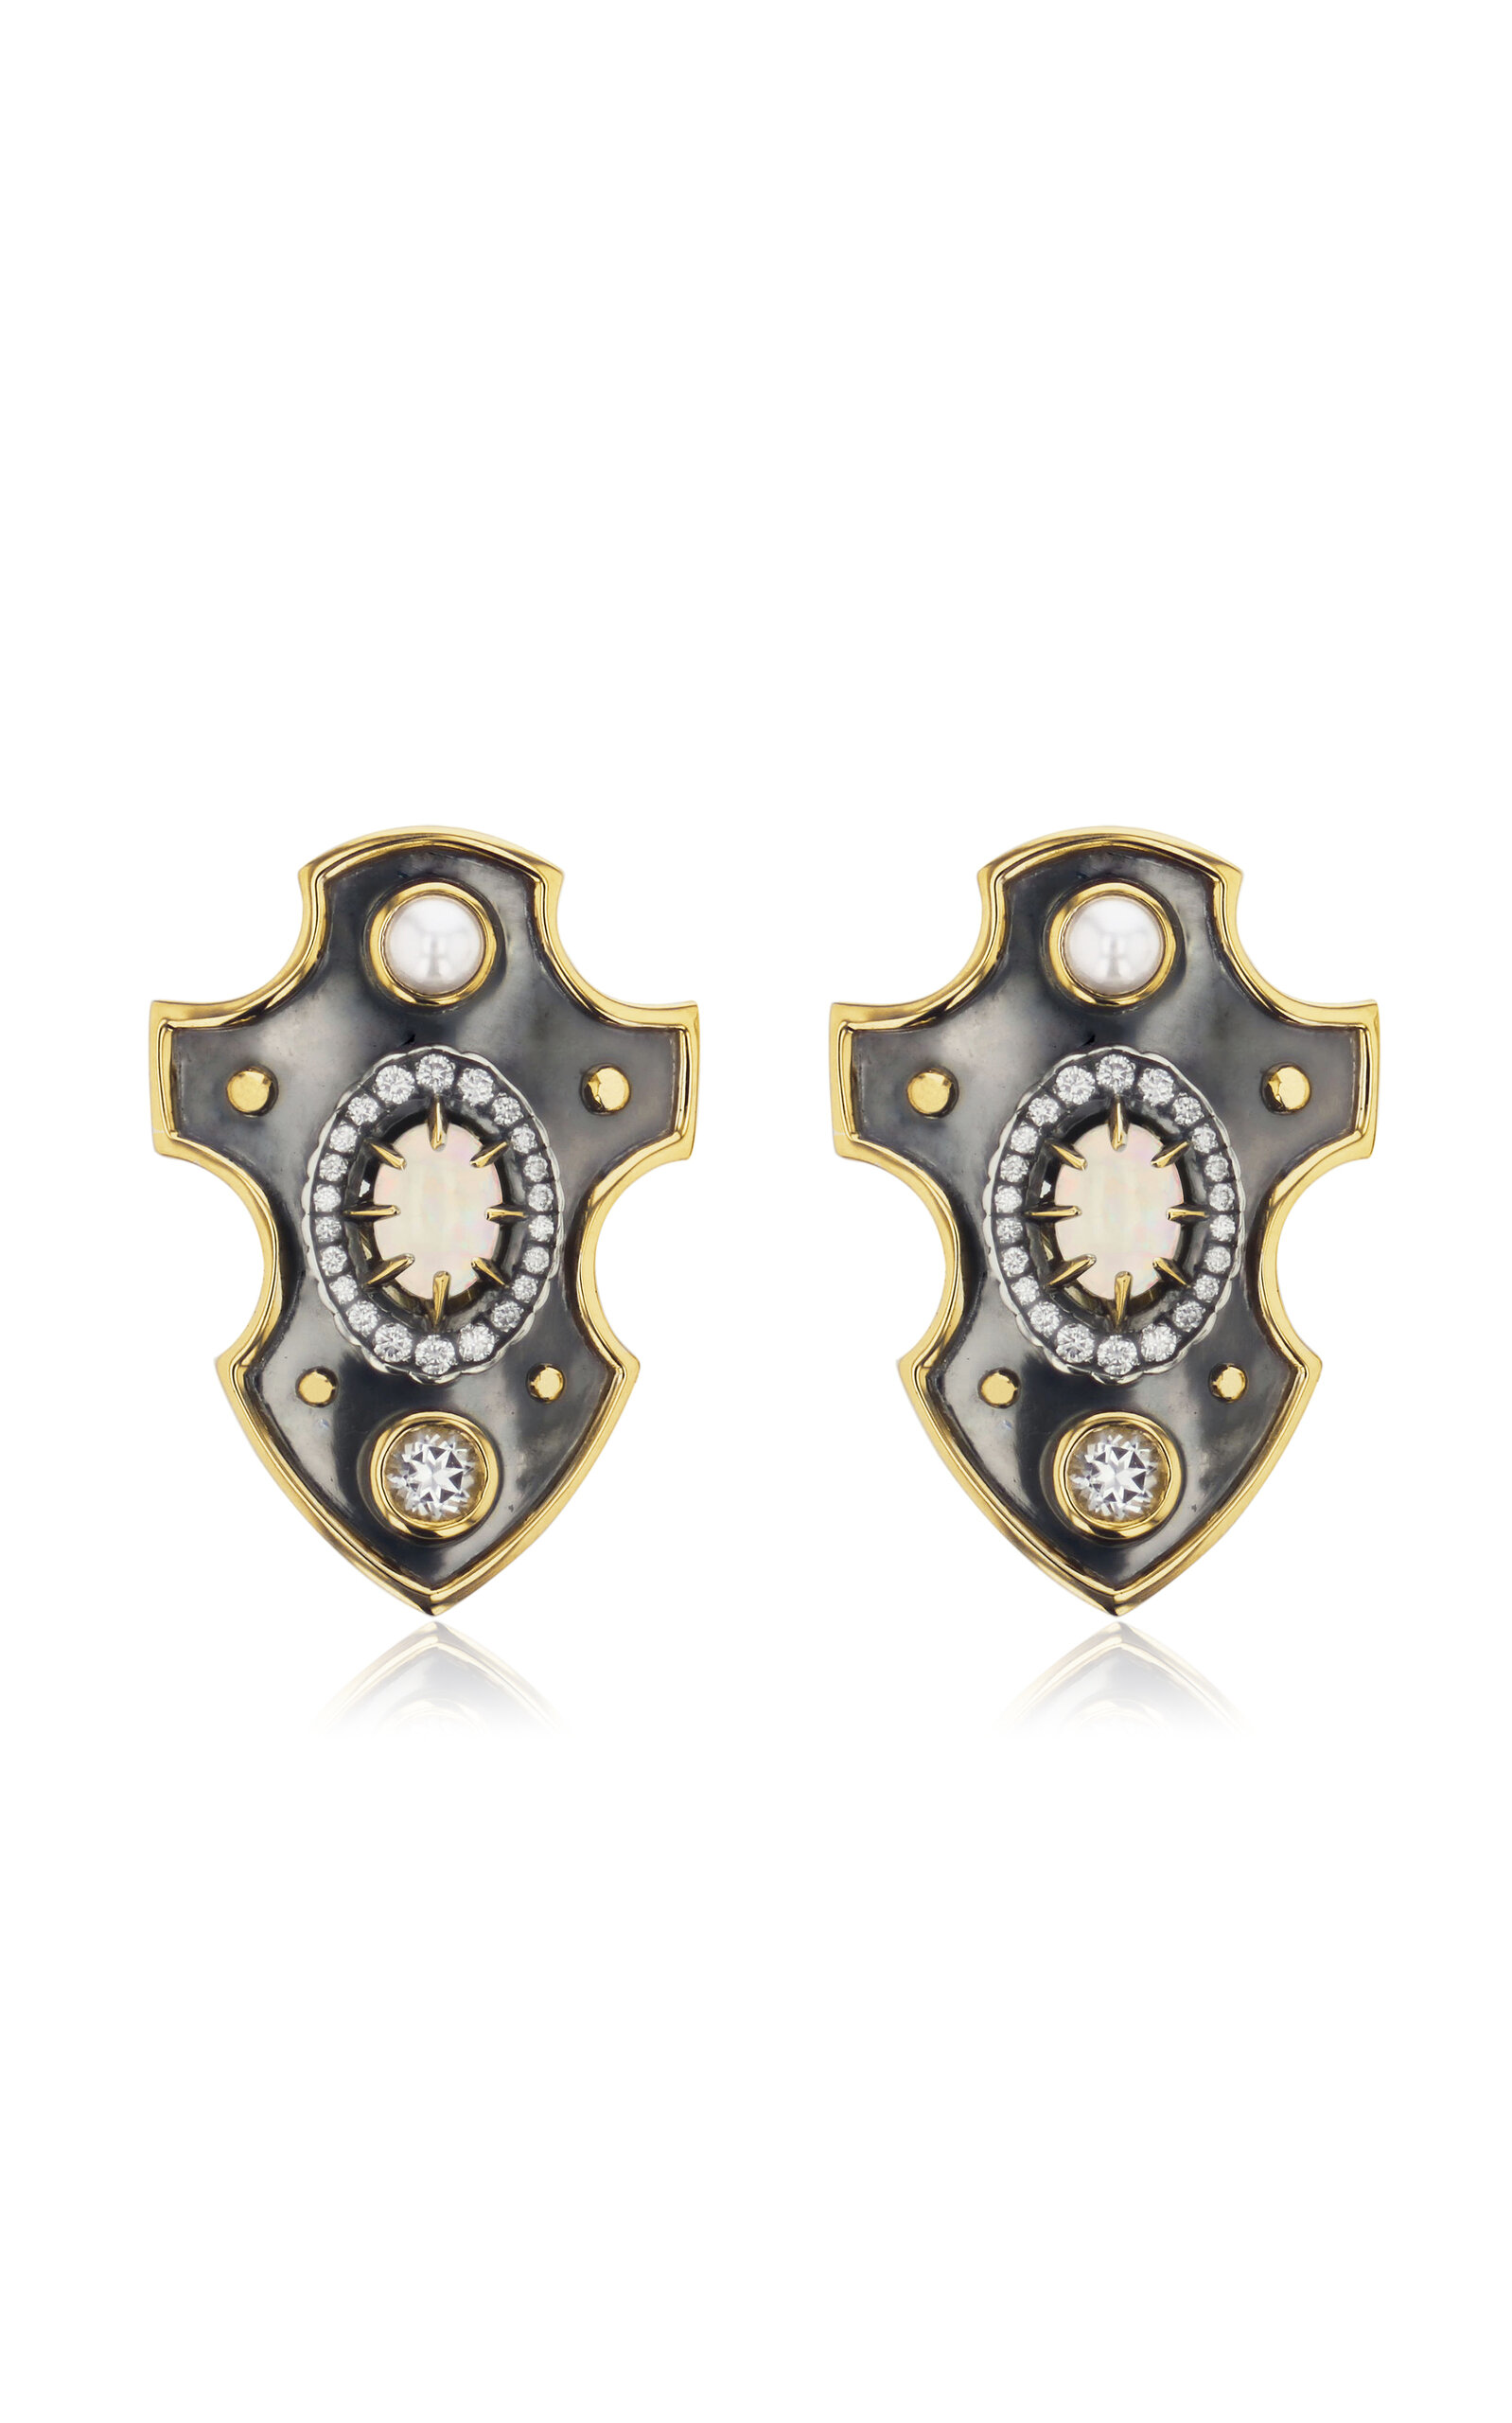 Elie Top Ecu 18k Yellow Gold; Distressed Silver Opal Earrings In Multi